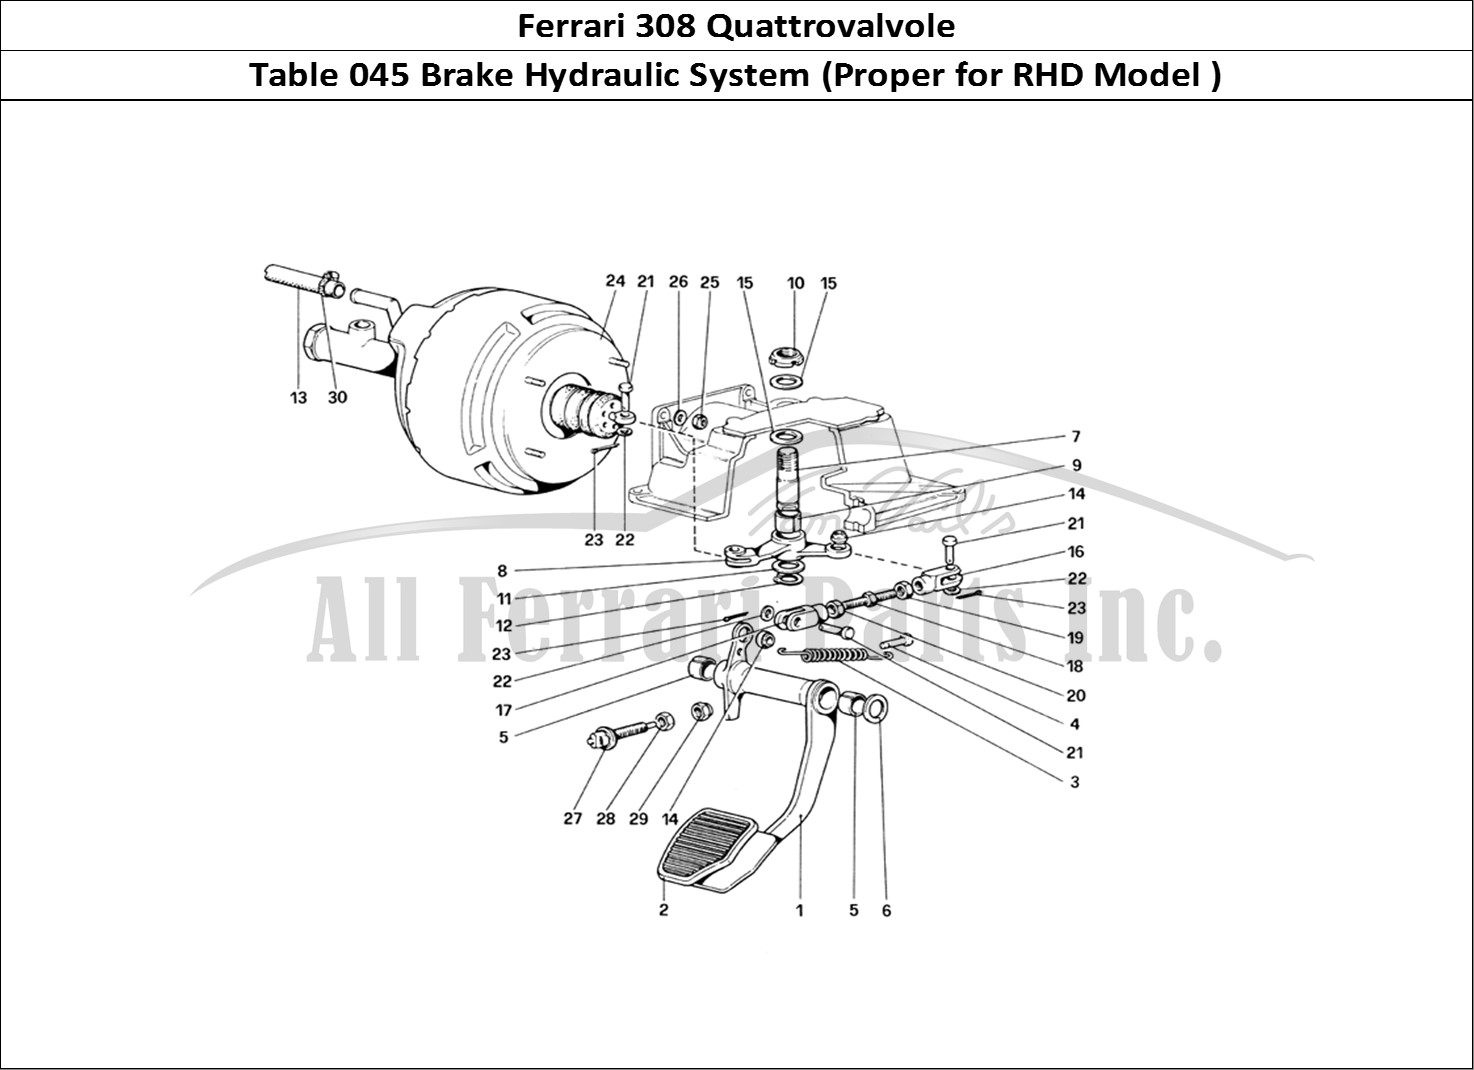 Ferrari Parts Ferrari 308 Quattrovalvole (1985) Page 045 Brake Hydraulic System (V